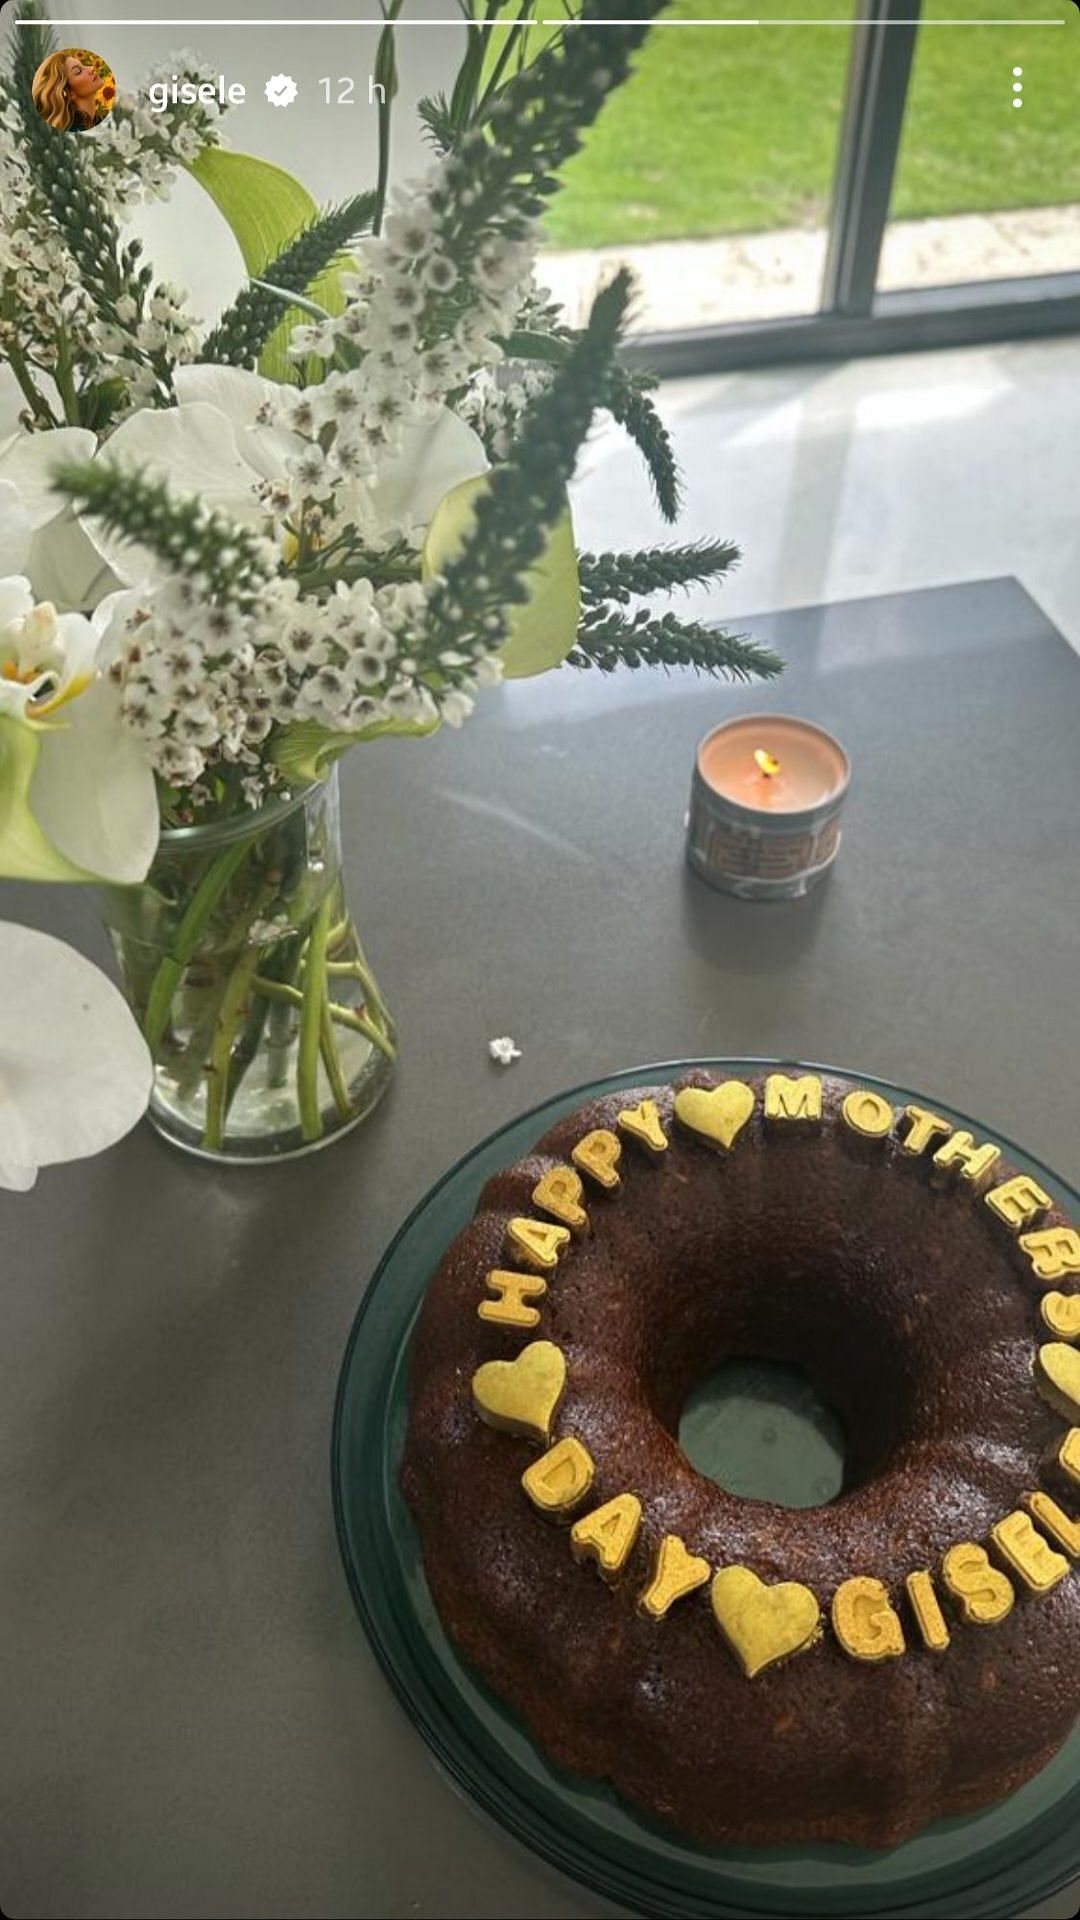 Gisele Bundchen shared the cake she received during Mother&#039;s Day. (Image credit: instagram.com/gisele)